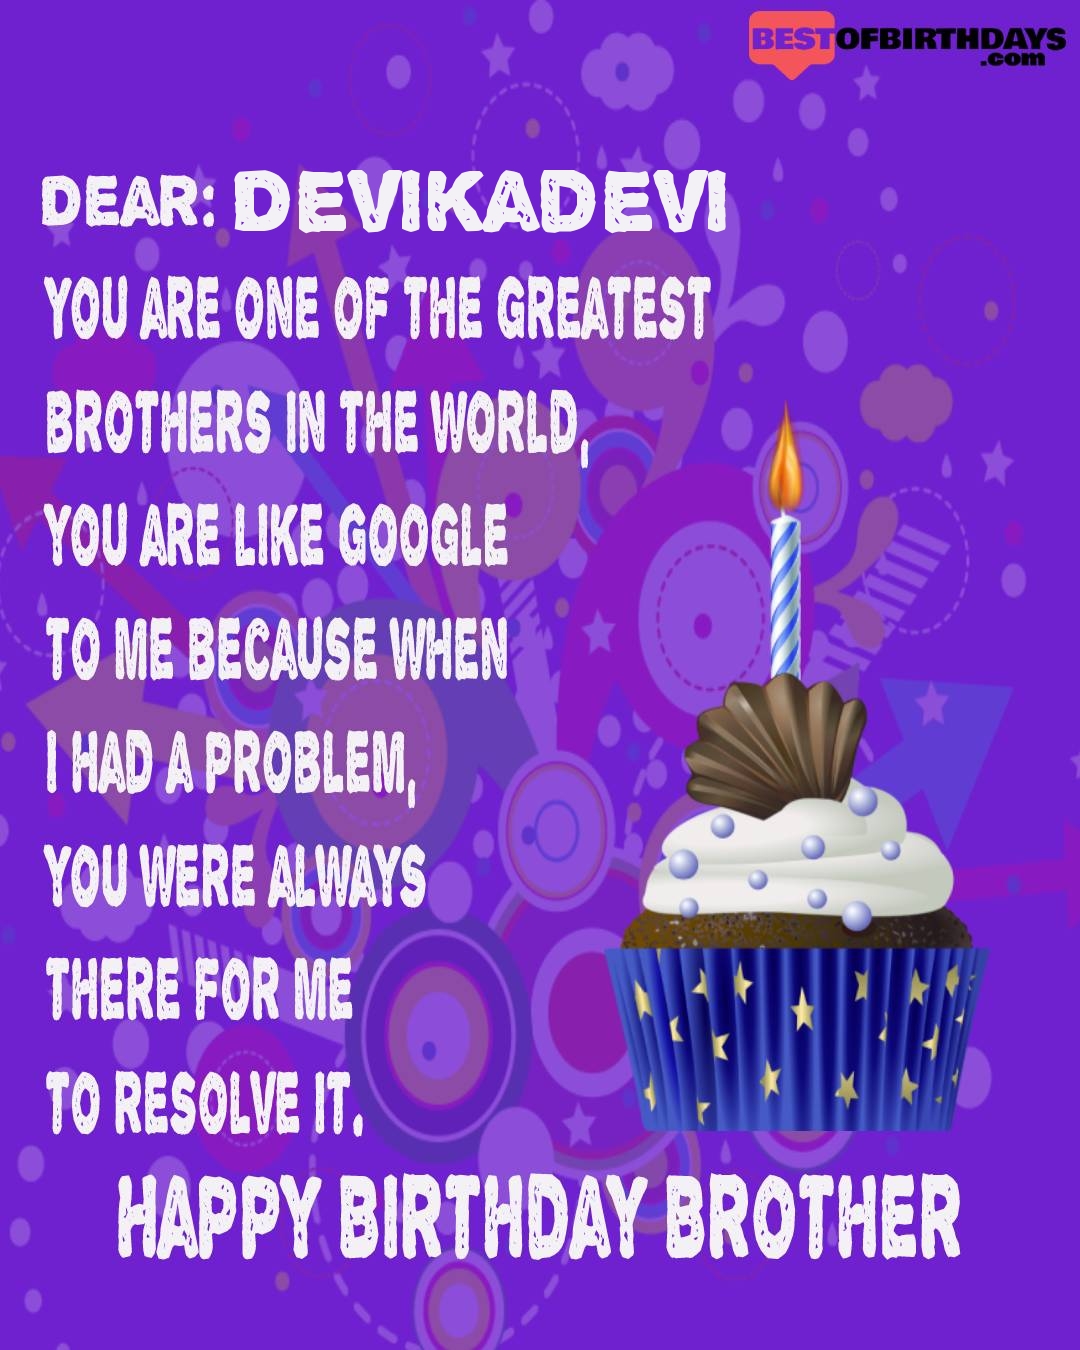 Happy birthday devikadevi bhai brother bro